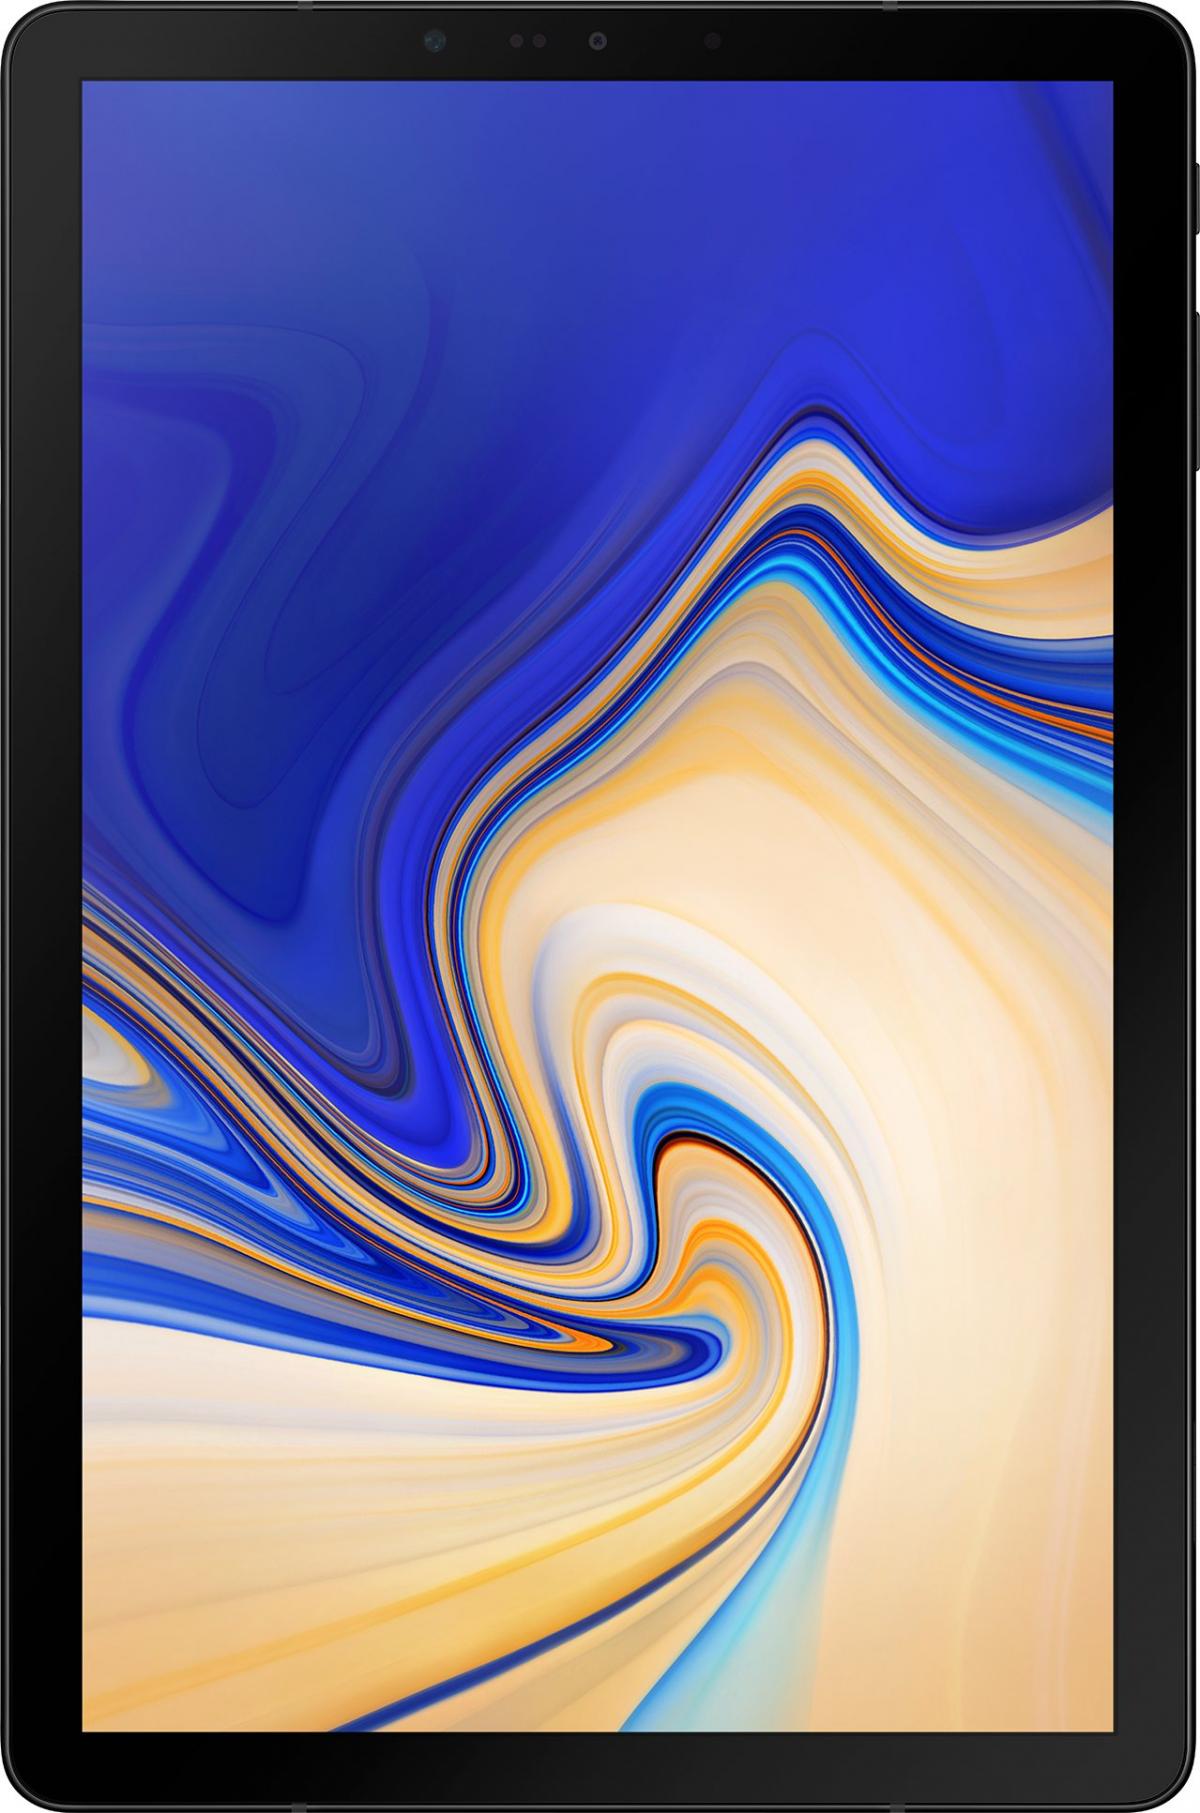 Galaxy Tab S4 SM-T835C